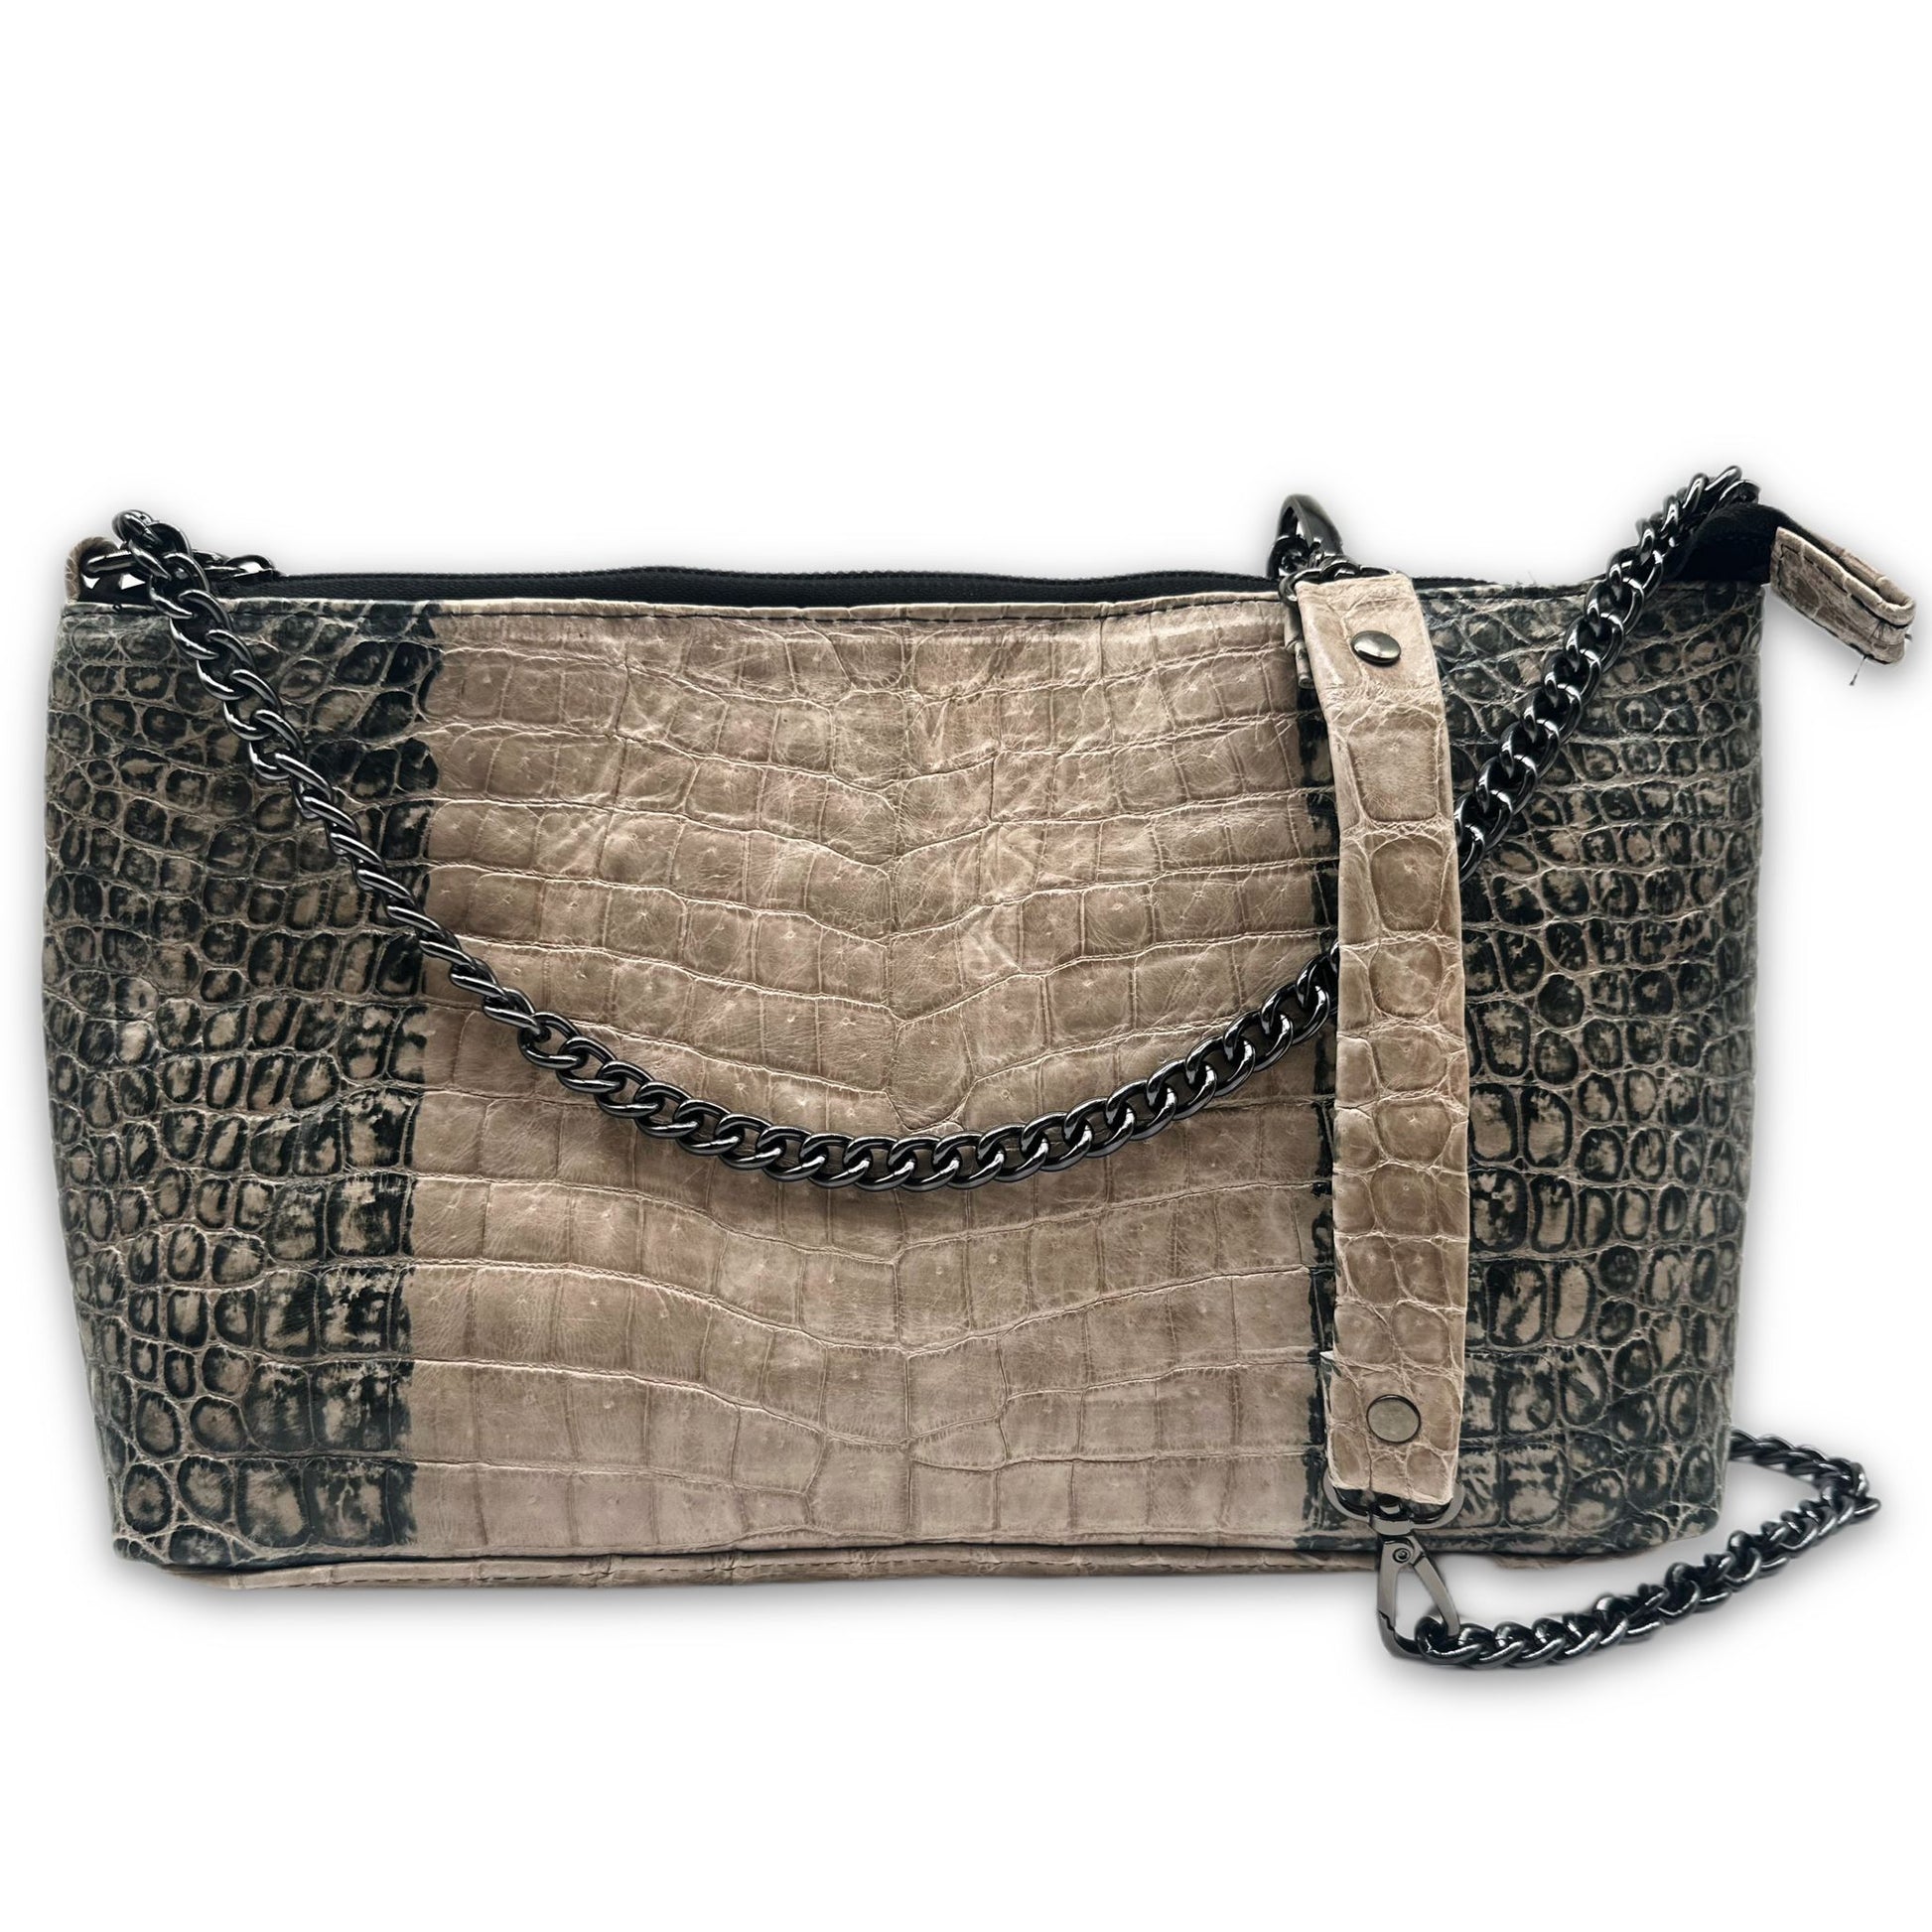 himalayan alligator purse